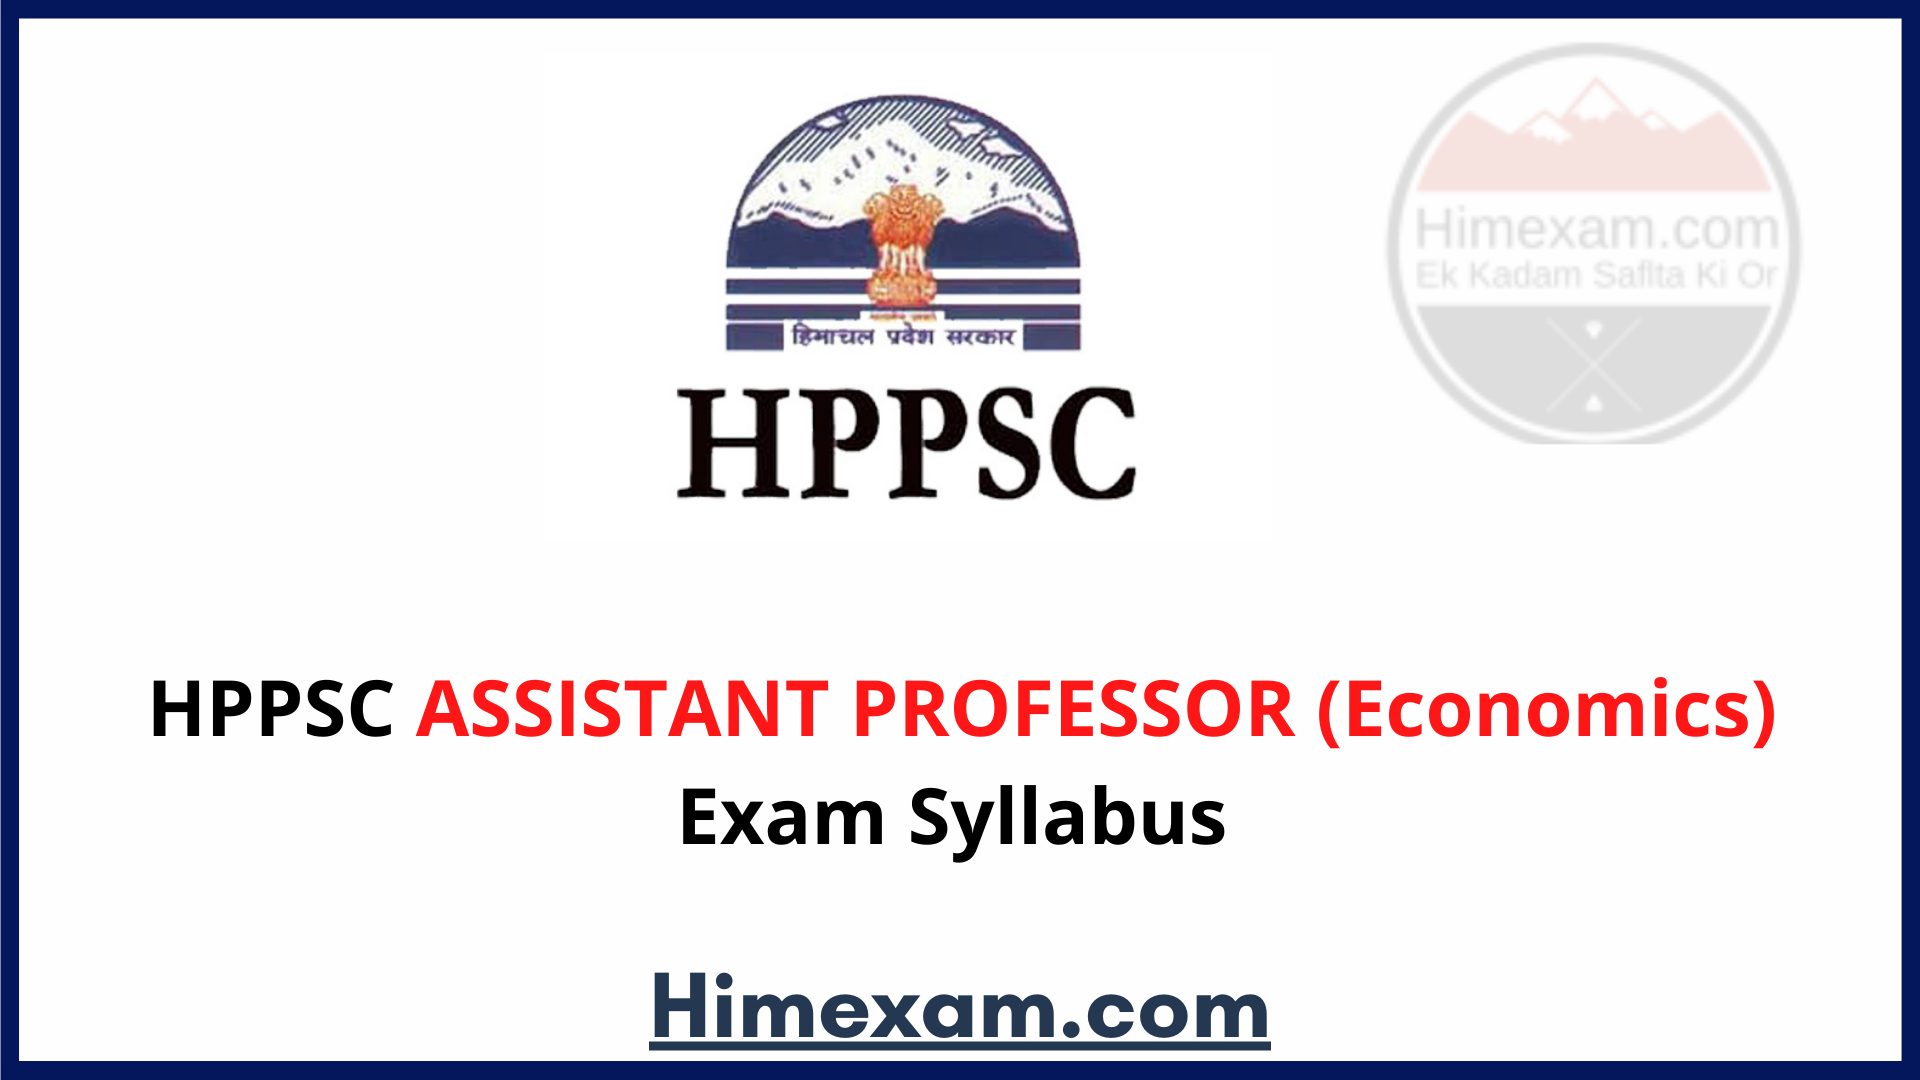 HPPSC ASSISTANT PROFESSOR (Economics) Exam Syllabus